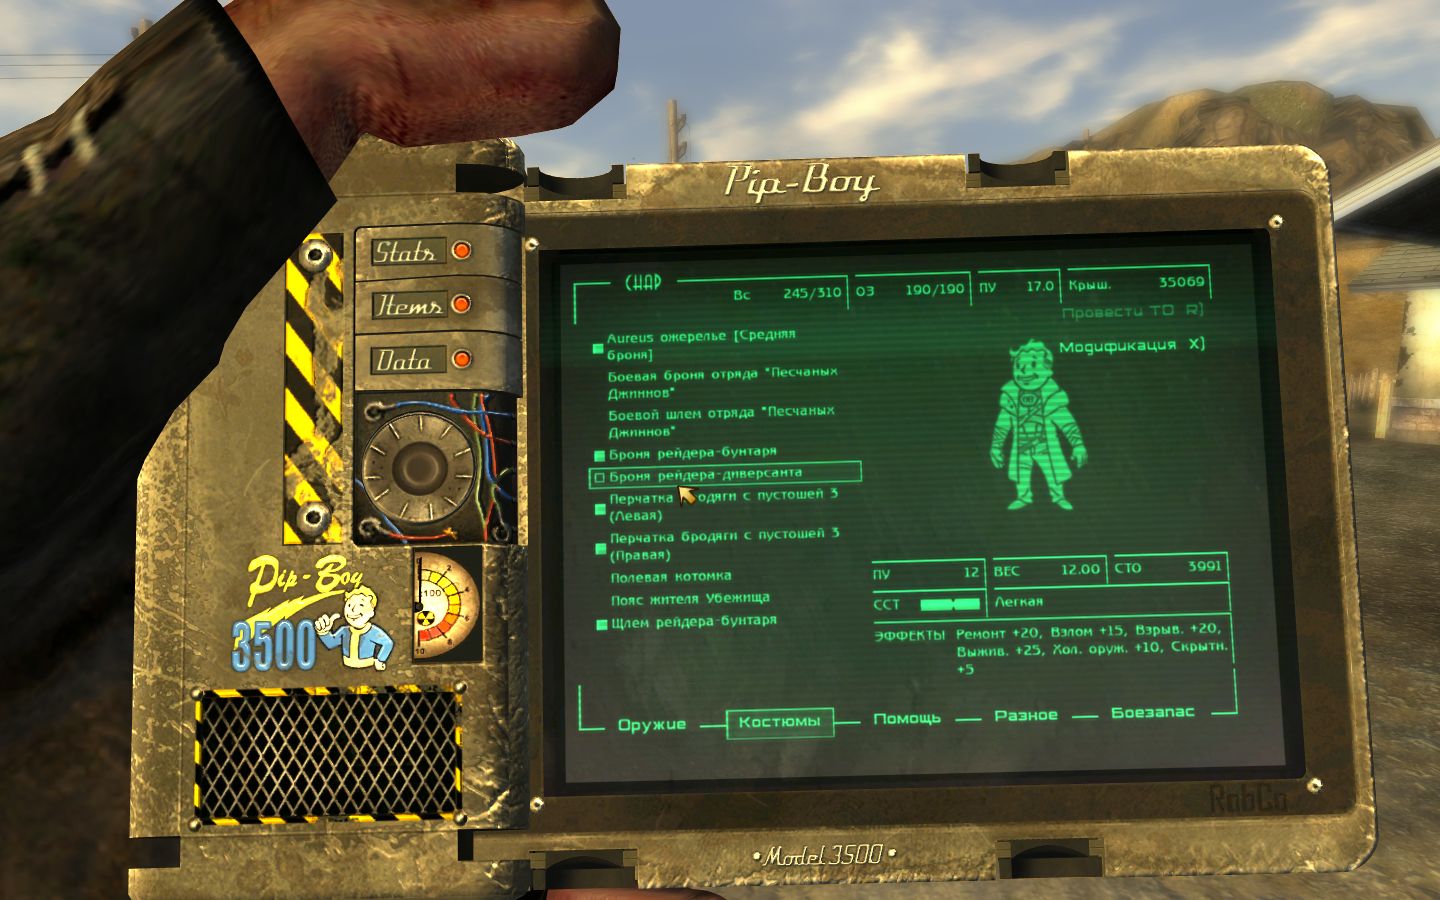 Fallout коды игры